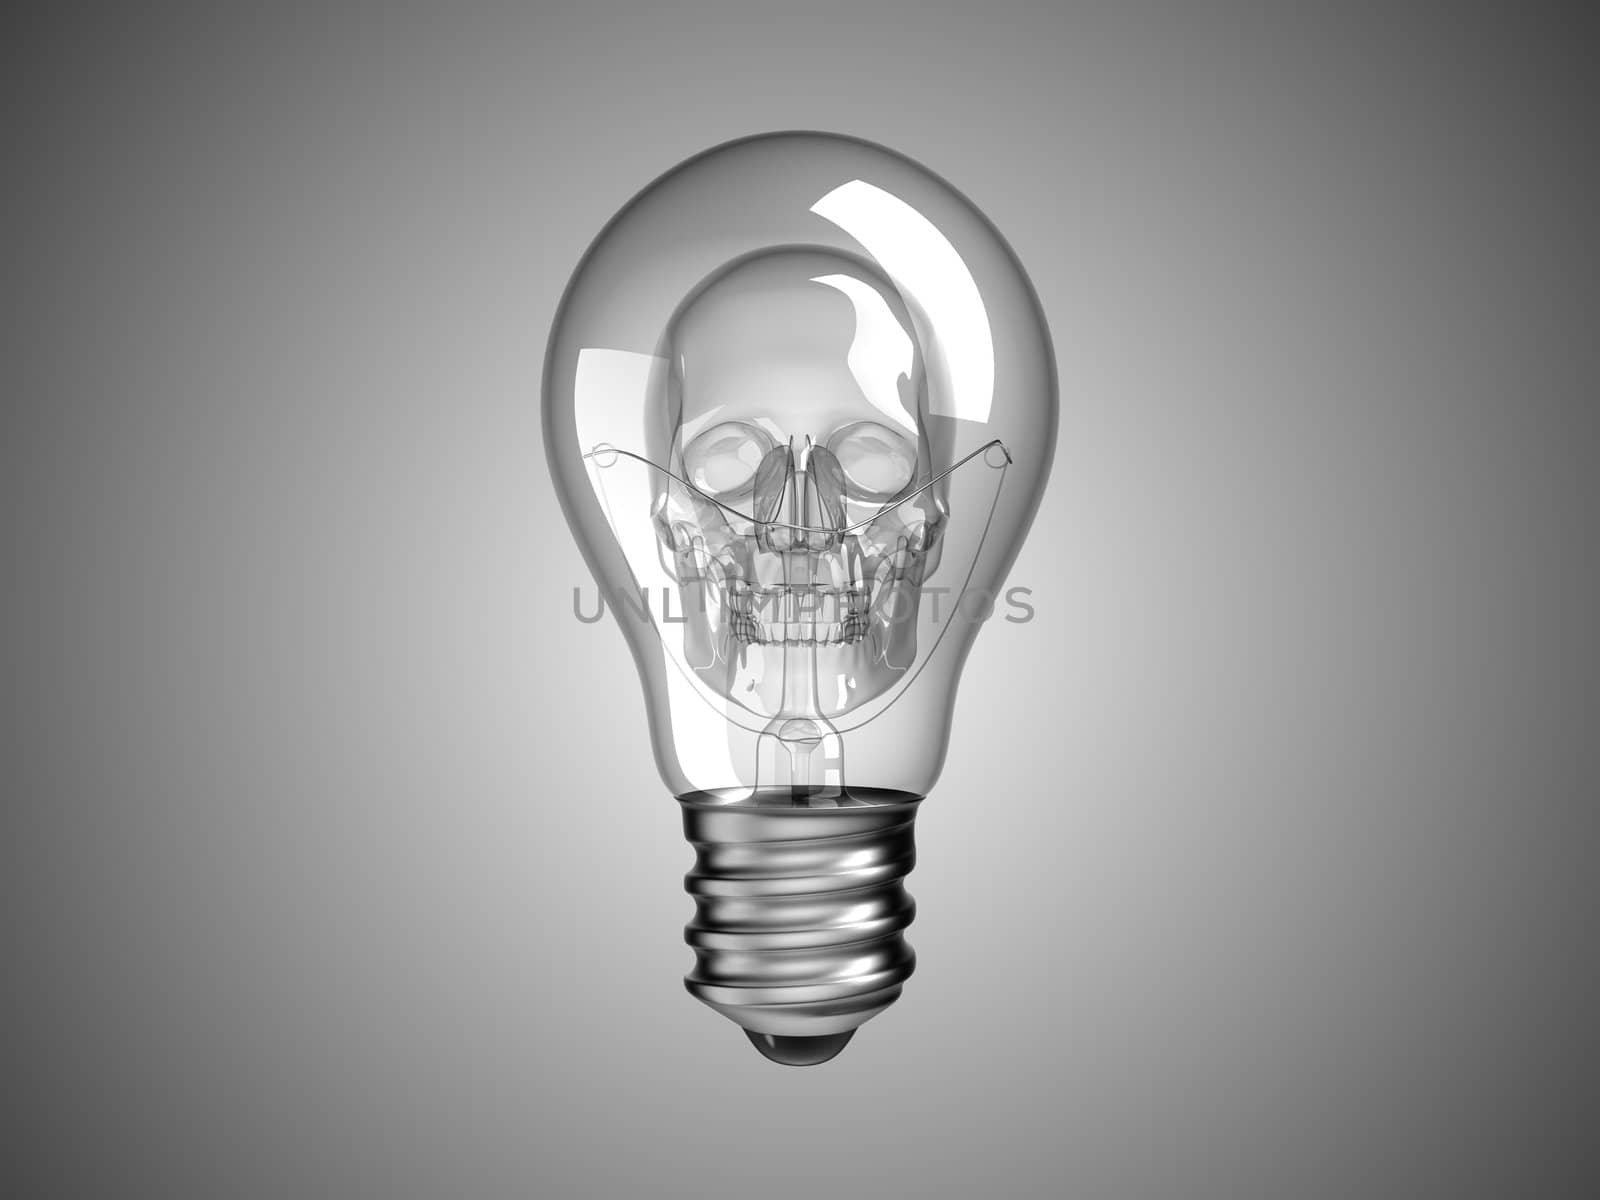 Spooky Skull inside Lightbulb - death and disease by Arsgera